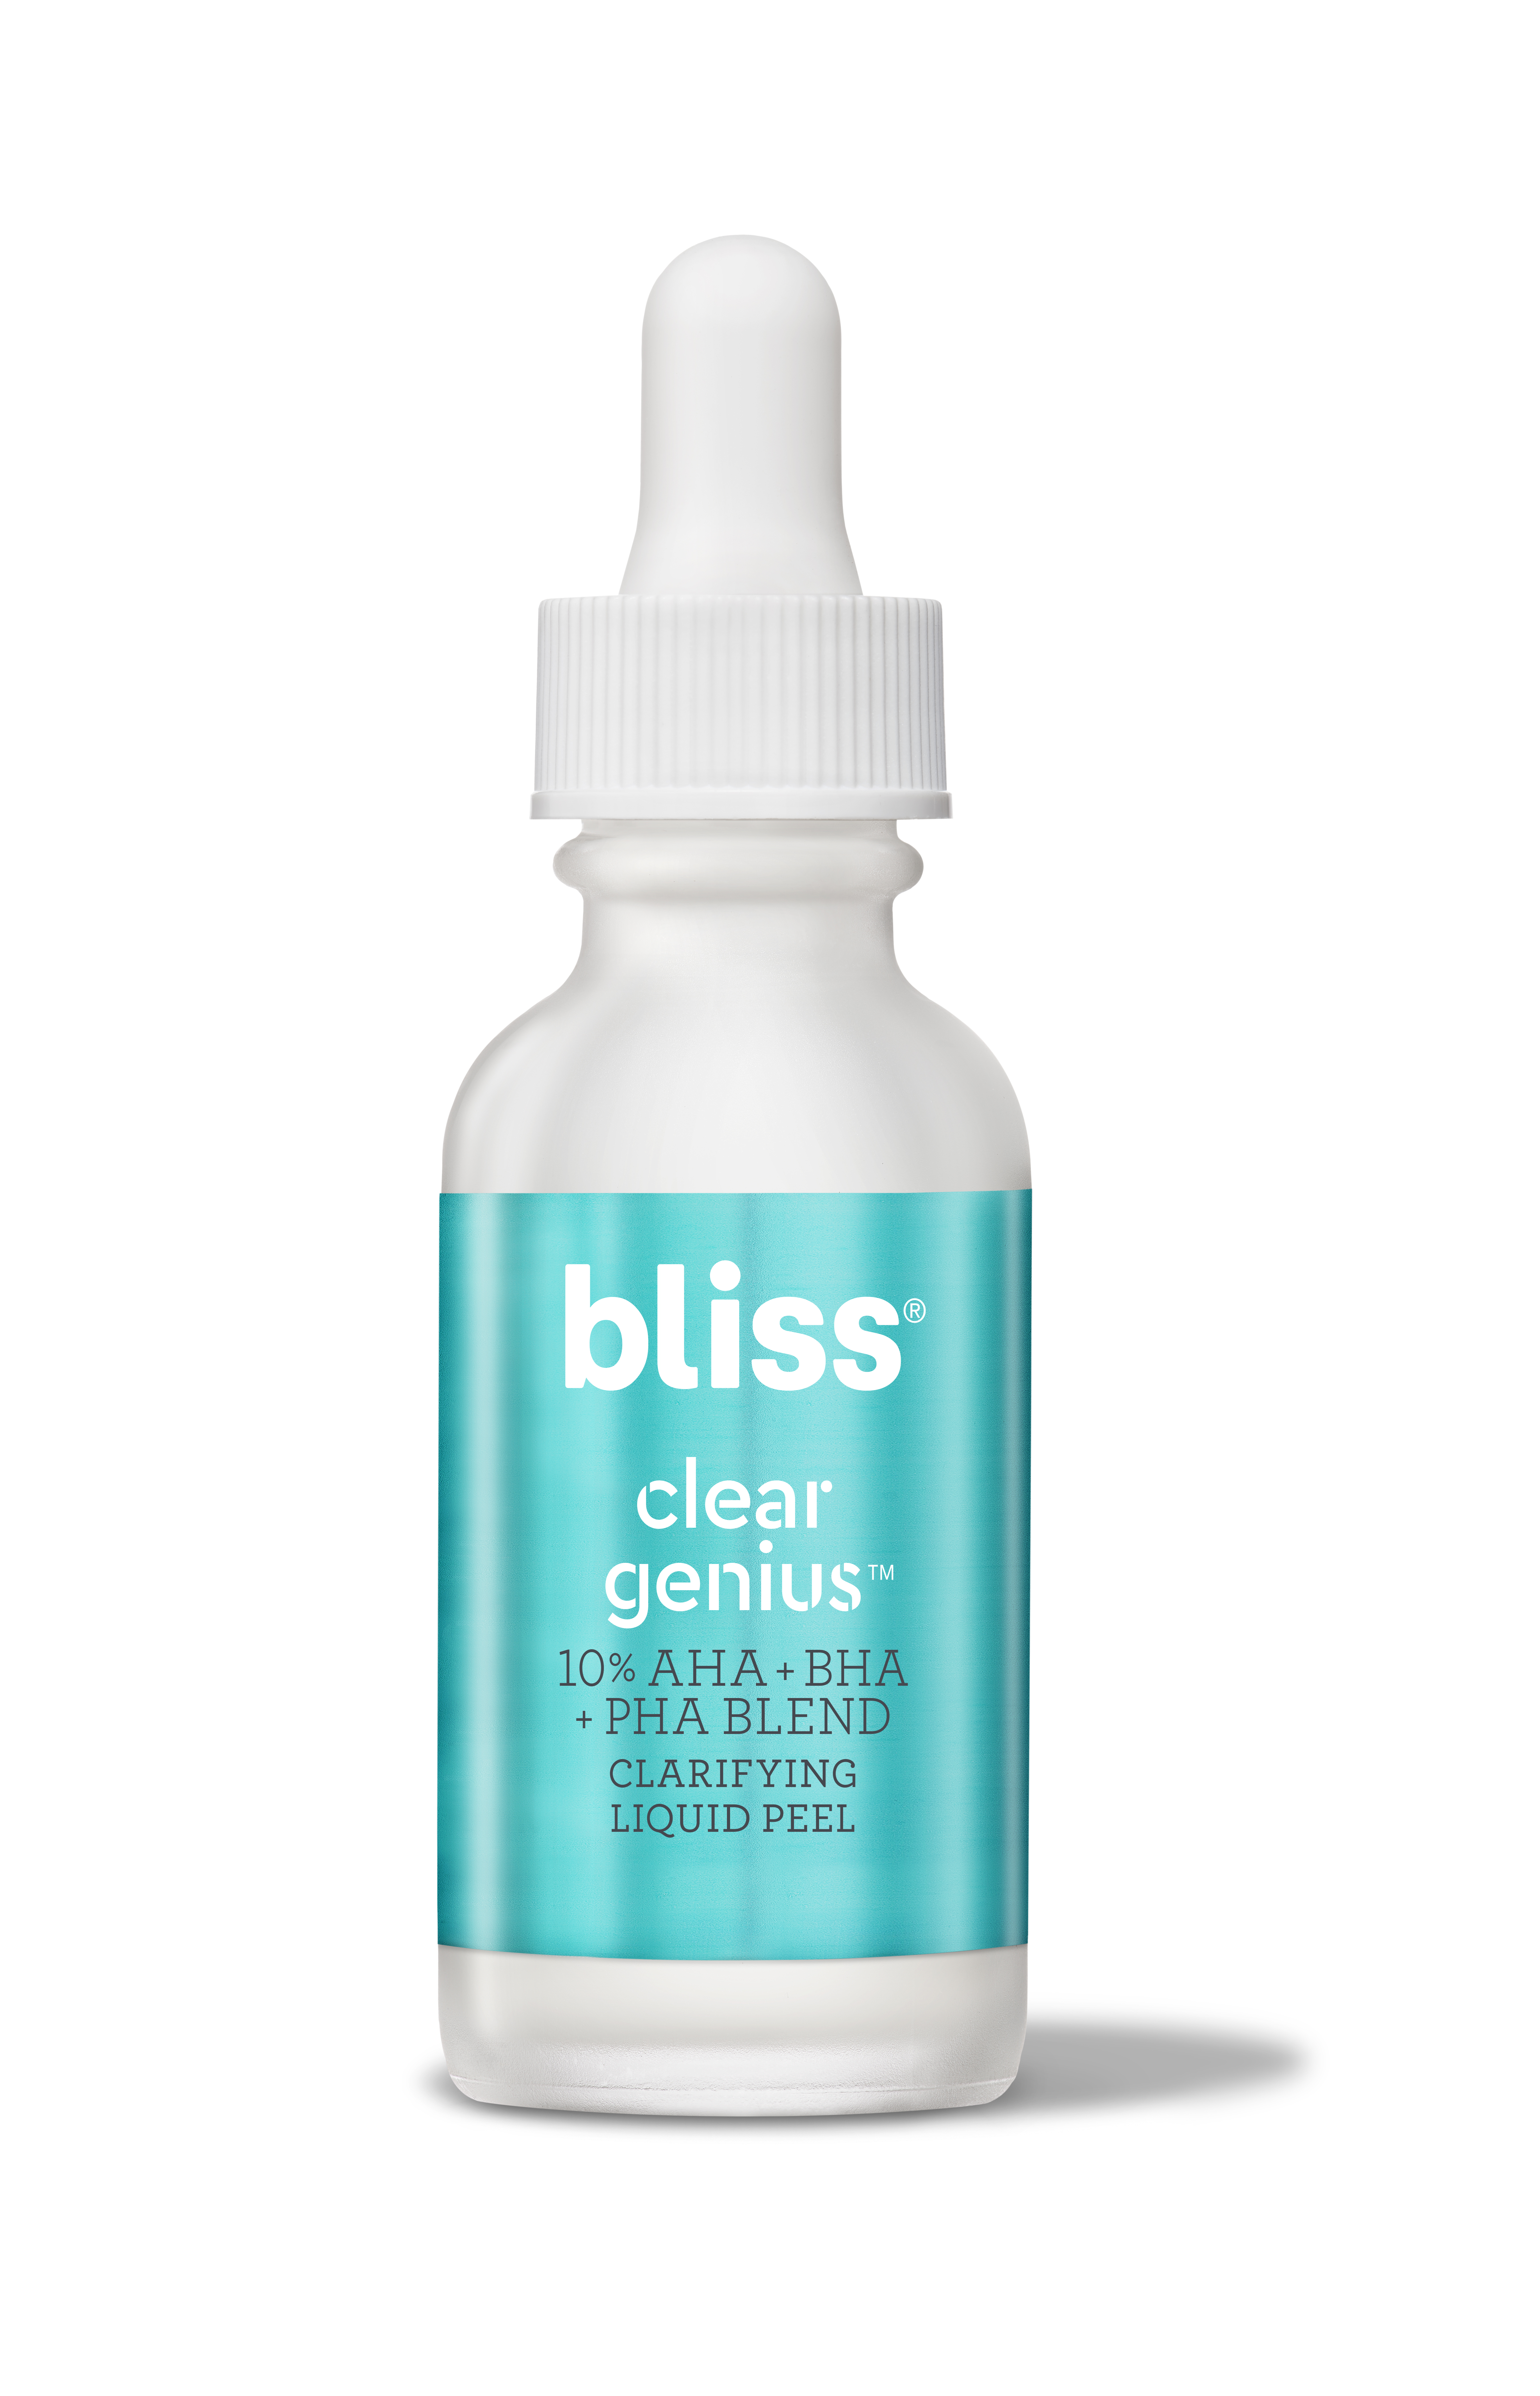 Bliss Clear Genius